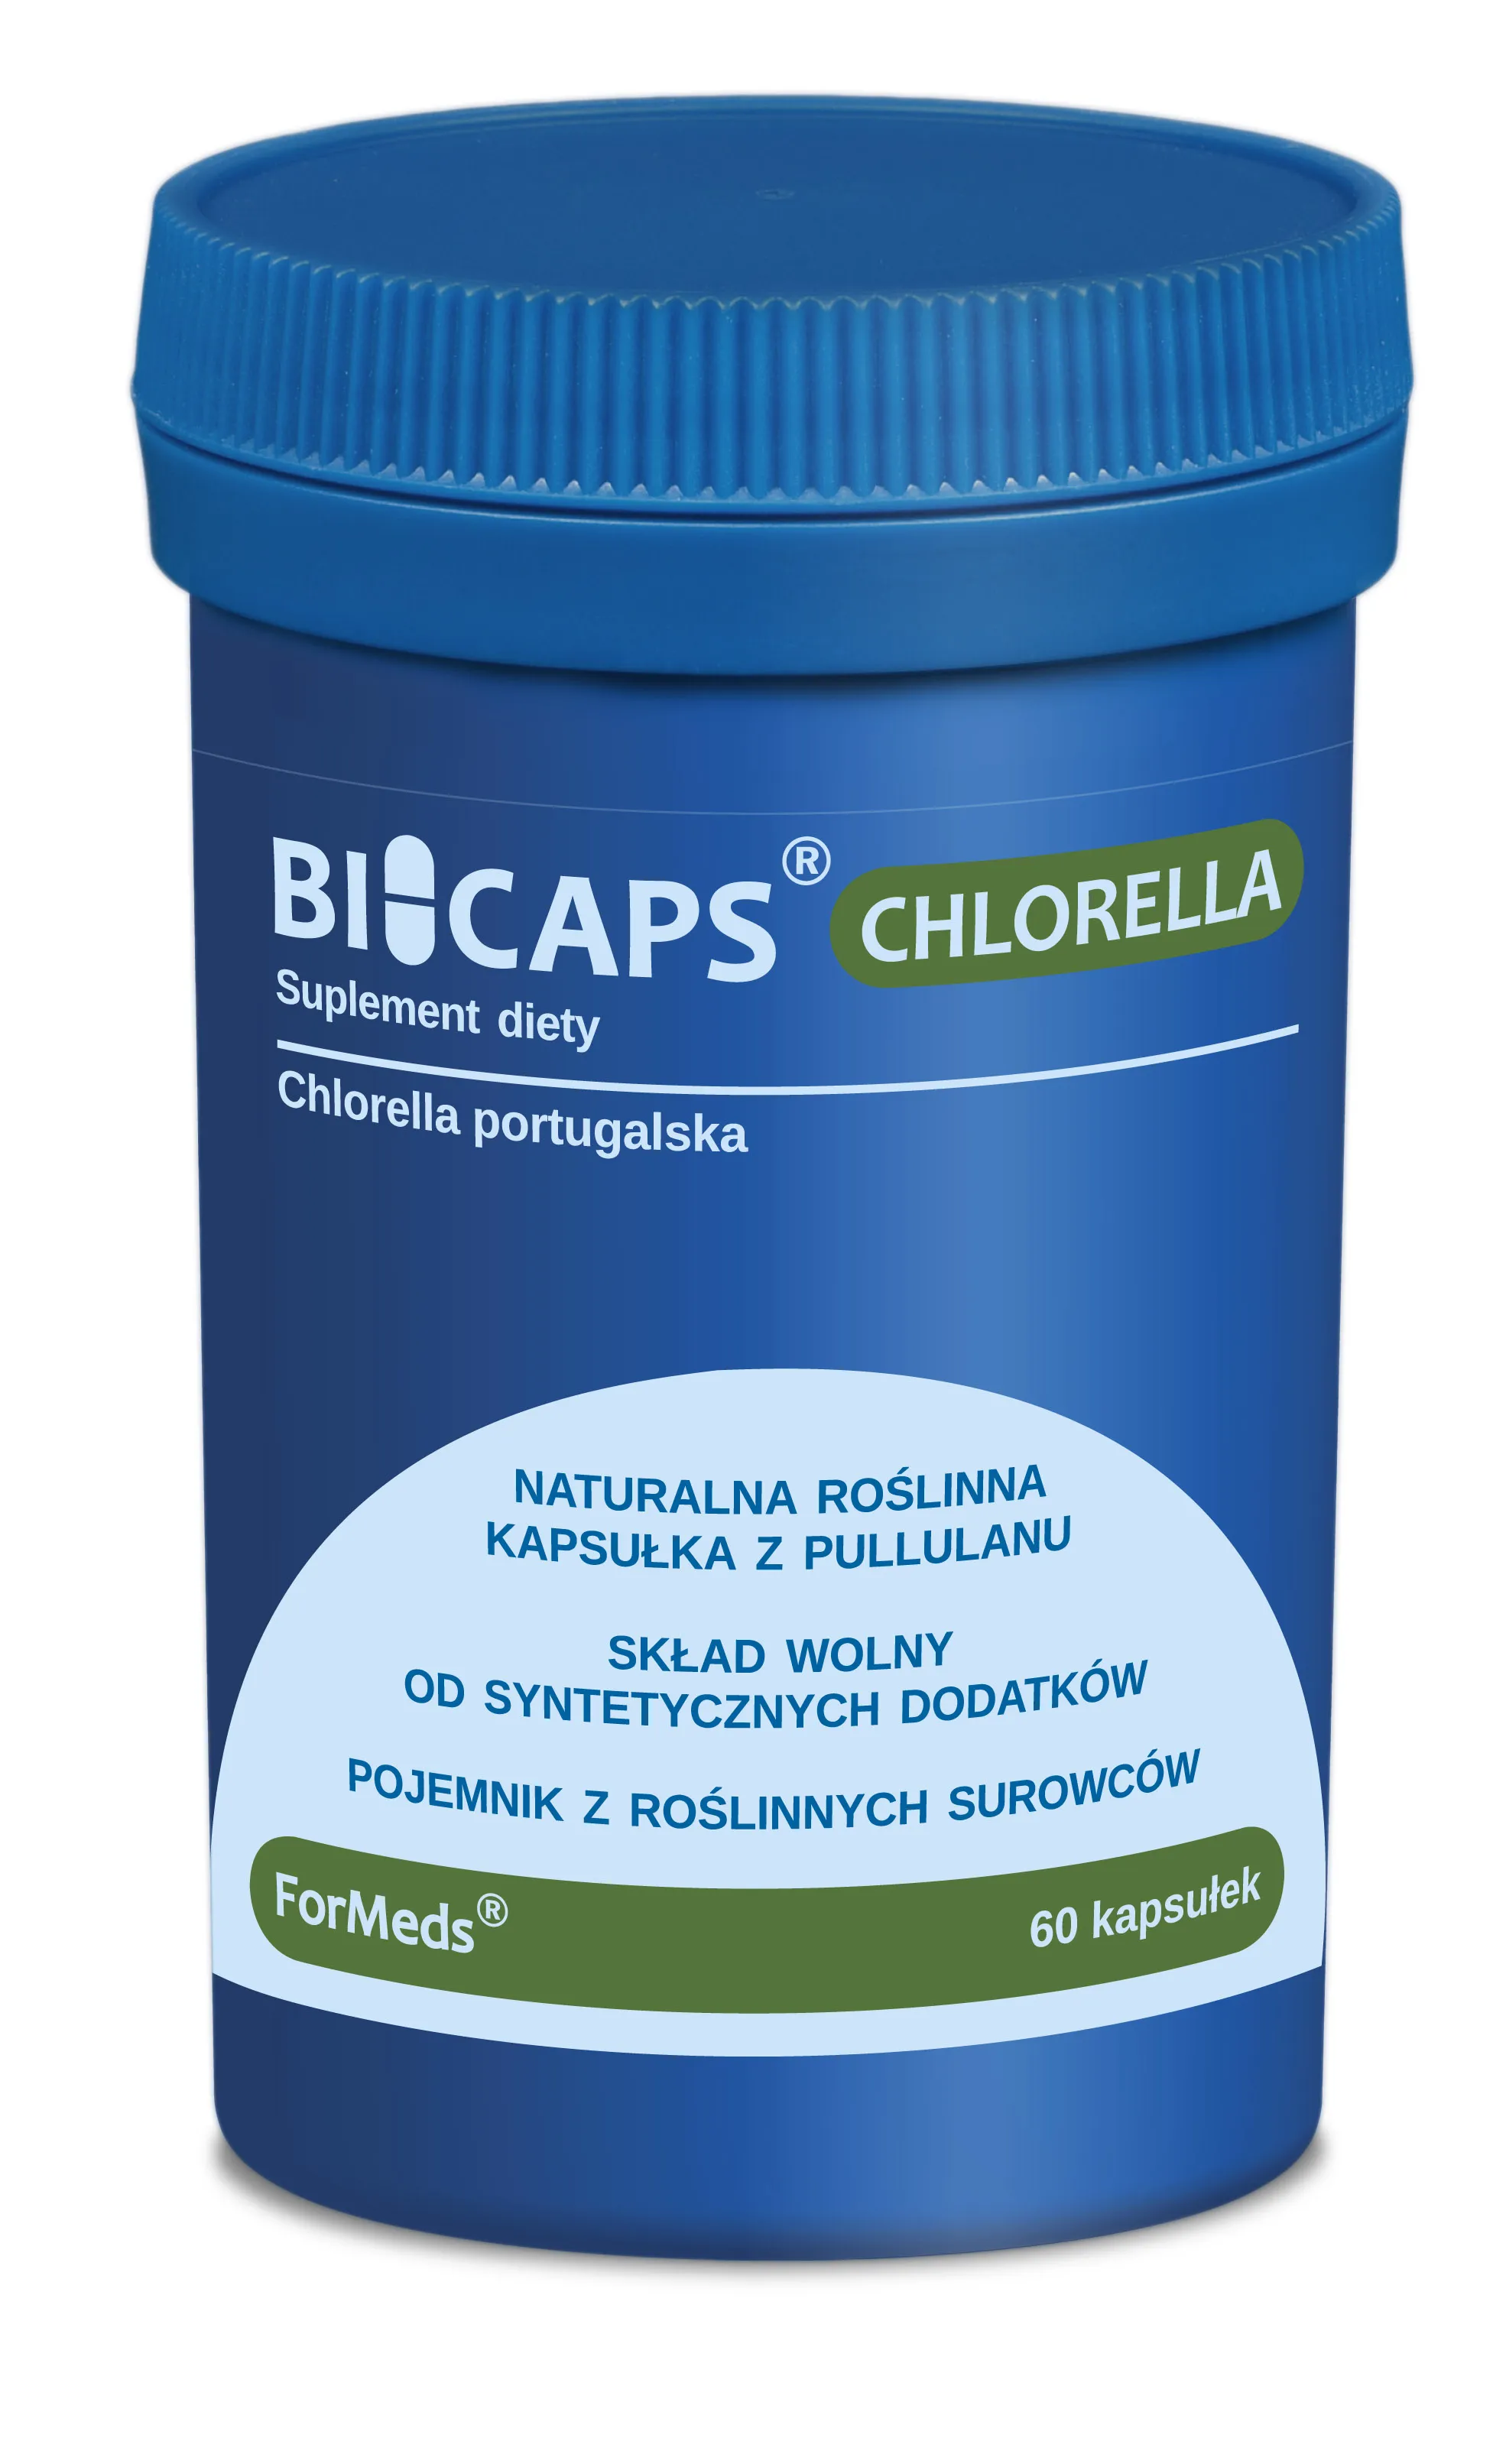 Formeds Bicaps Chlorella, suplement diety, 60 kapsułek